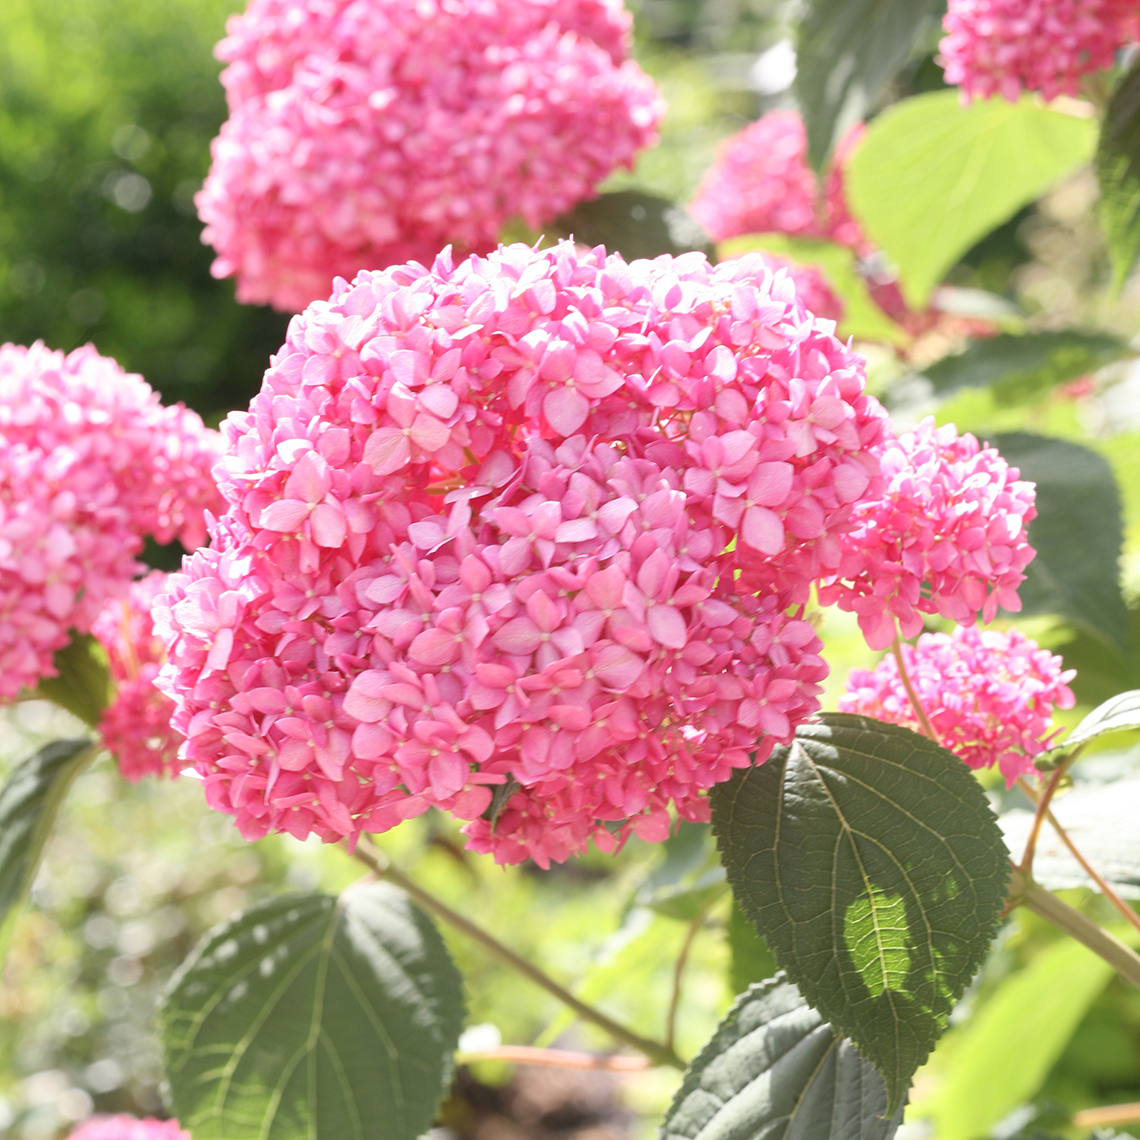 Closeup of the pink flowers of Invincibelle Spirit hydrangea